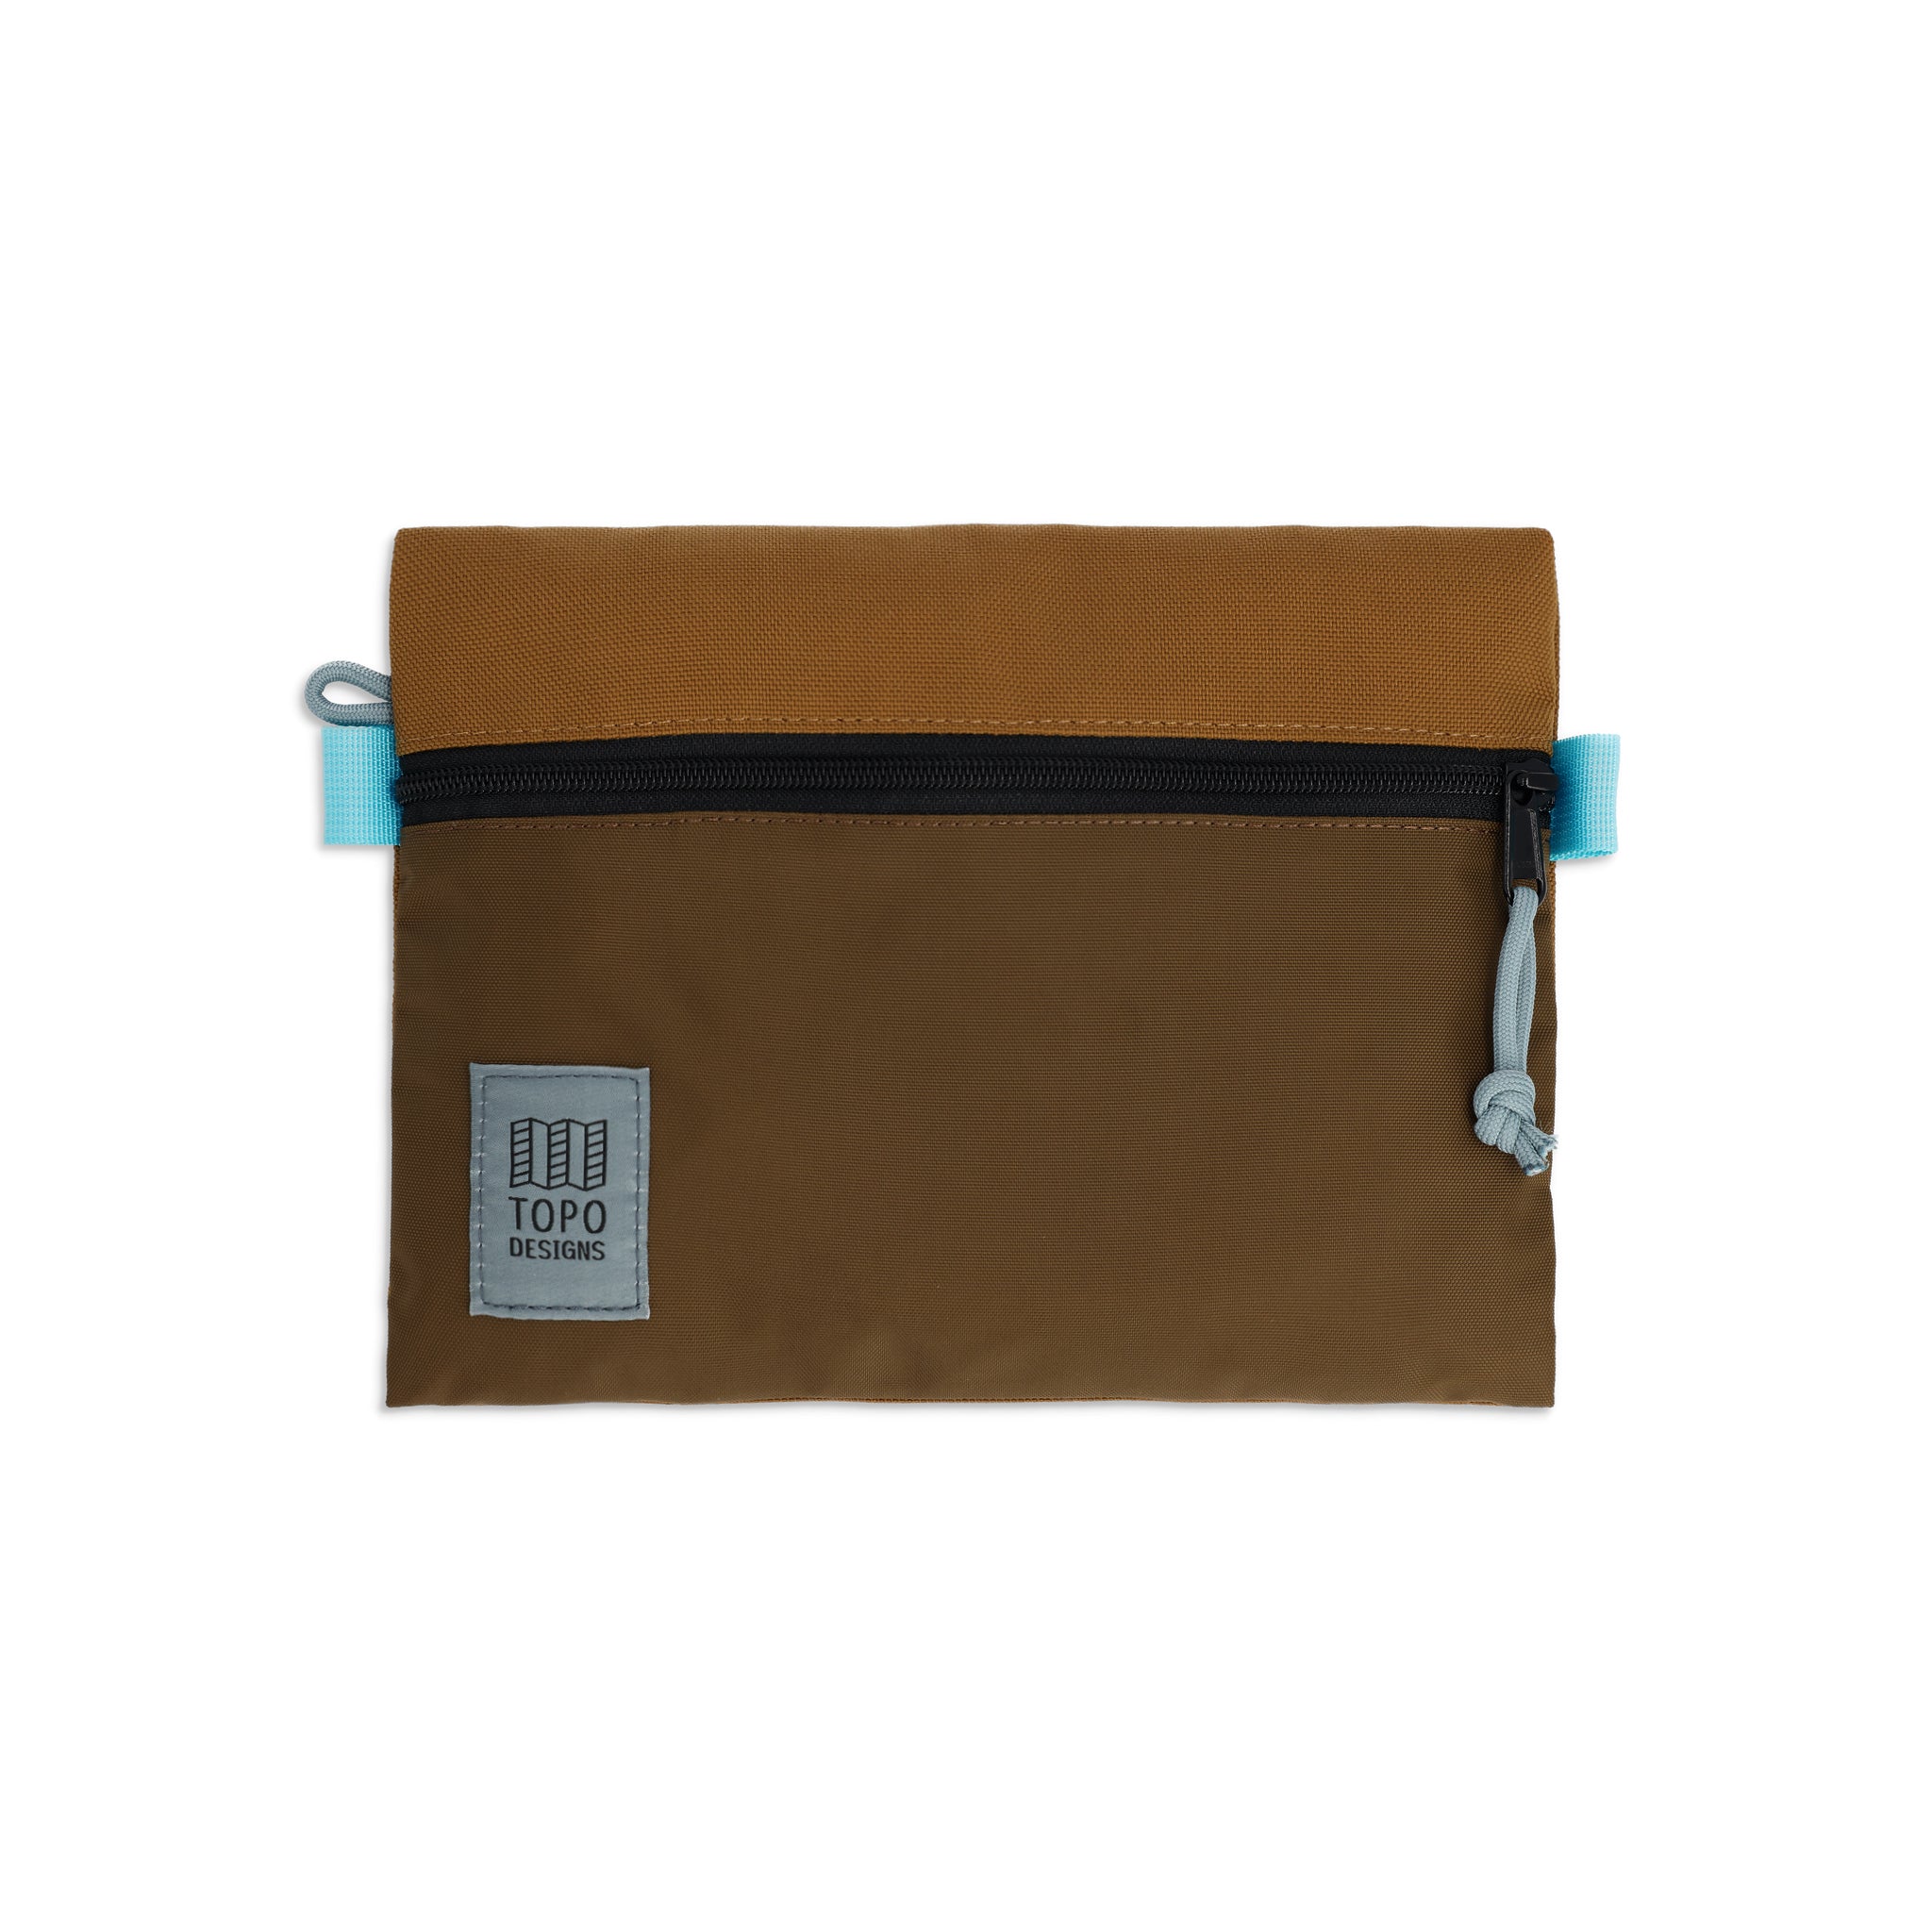 Topo Designs Accessory Bag medium in "Desert Palm / Pond Blue"